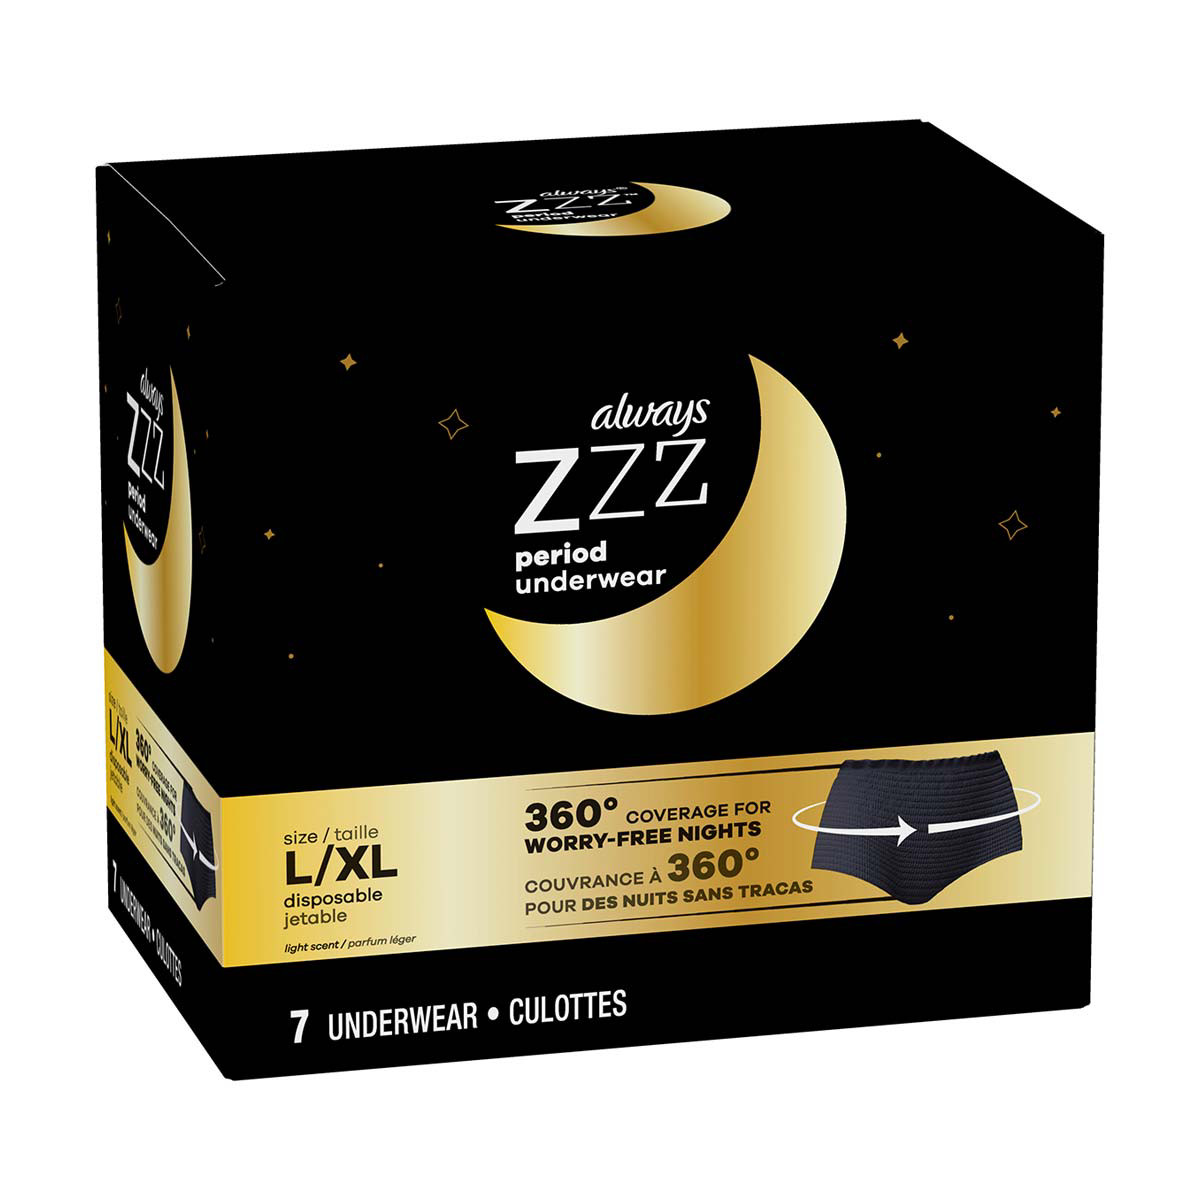 Always Zzzs Overnight Disposable Period Underwear (Size 6